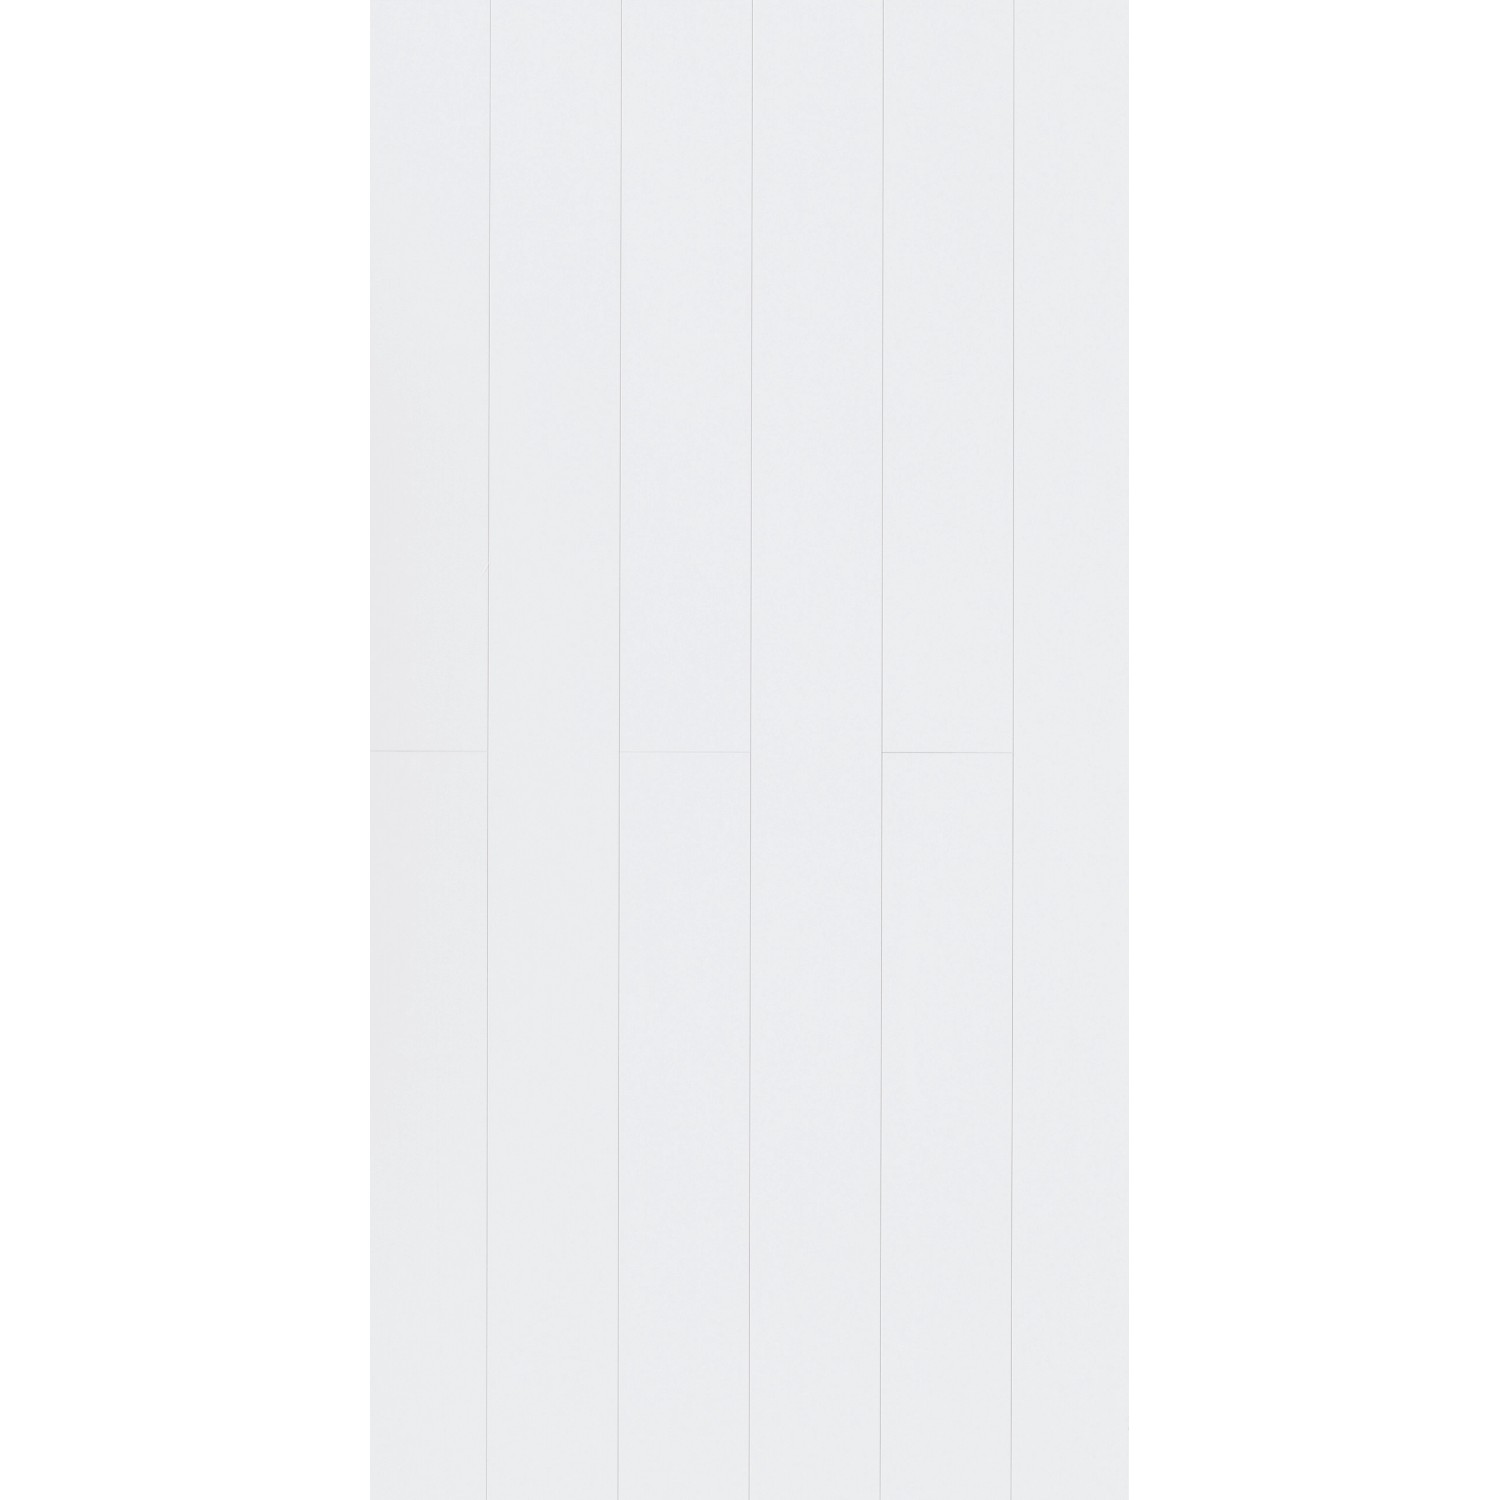 Parador Dekorpaneel RapidoClick 128 cm x 22,3 cm Weiß Seidenmatt von Parador